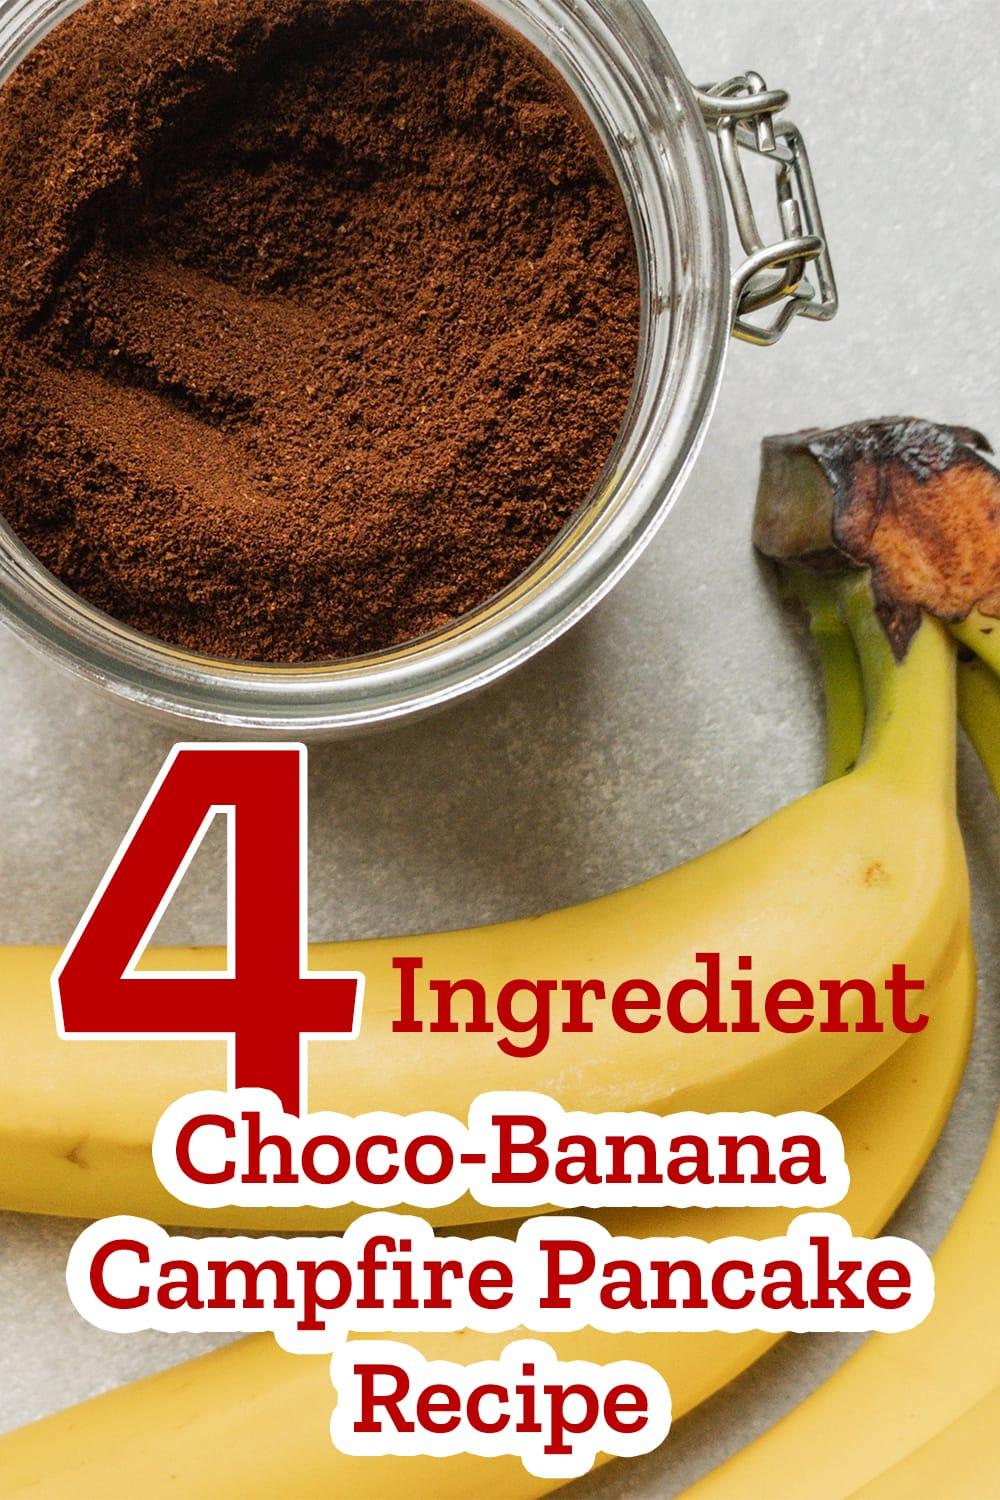 Choco banana pancake recipe